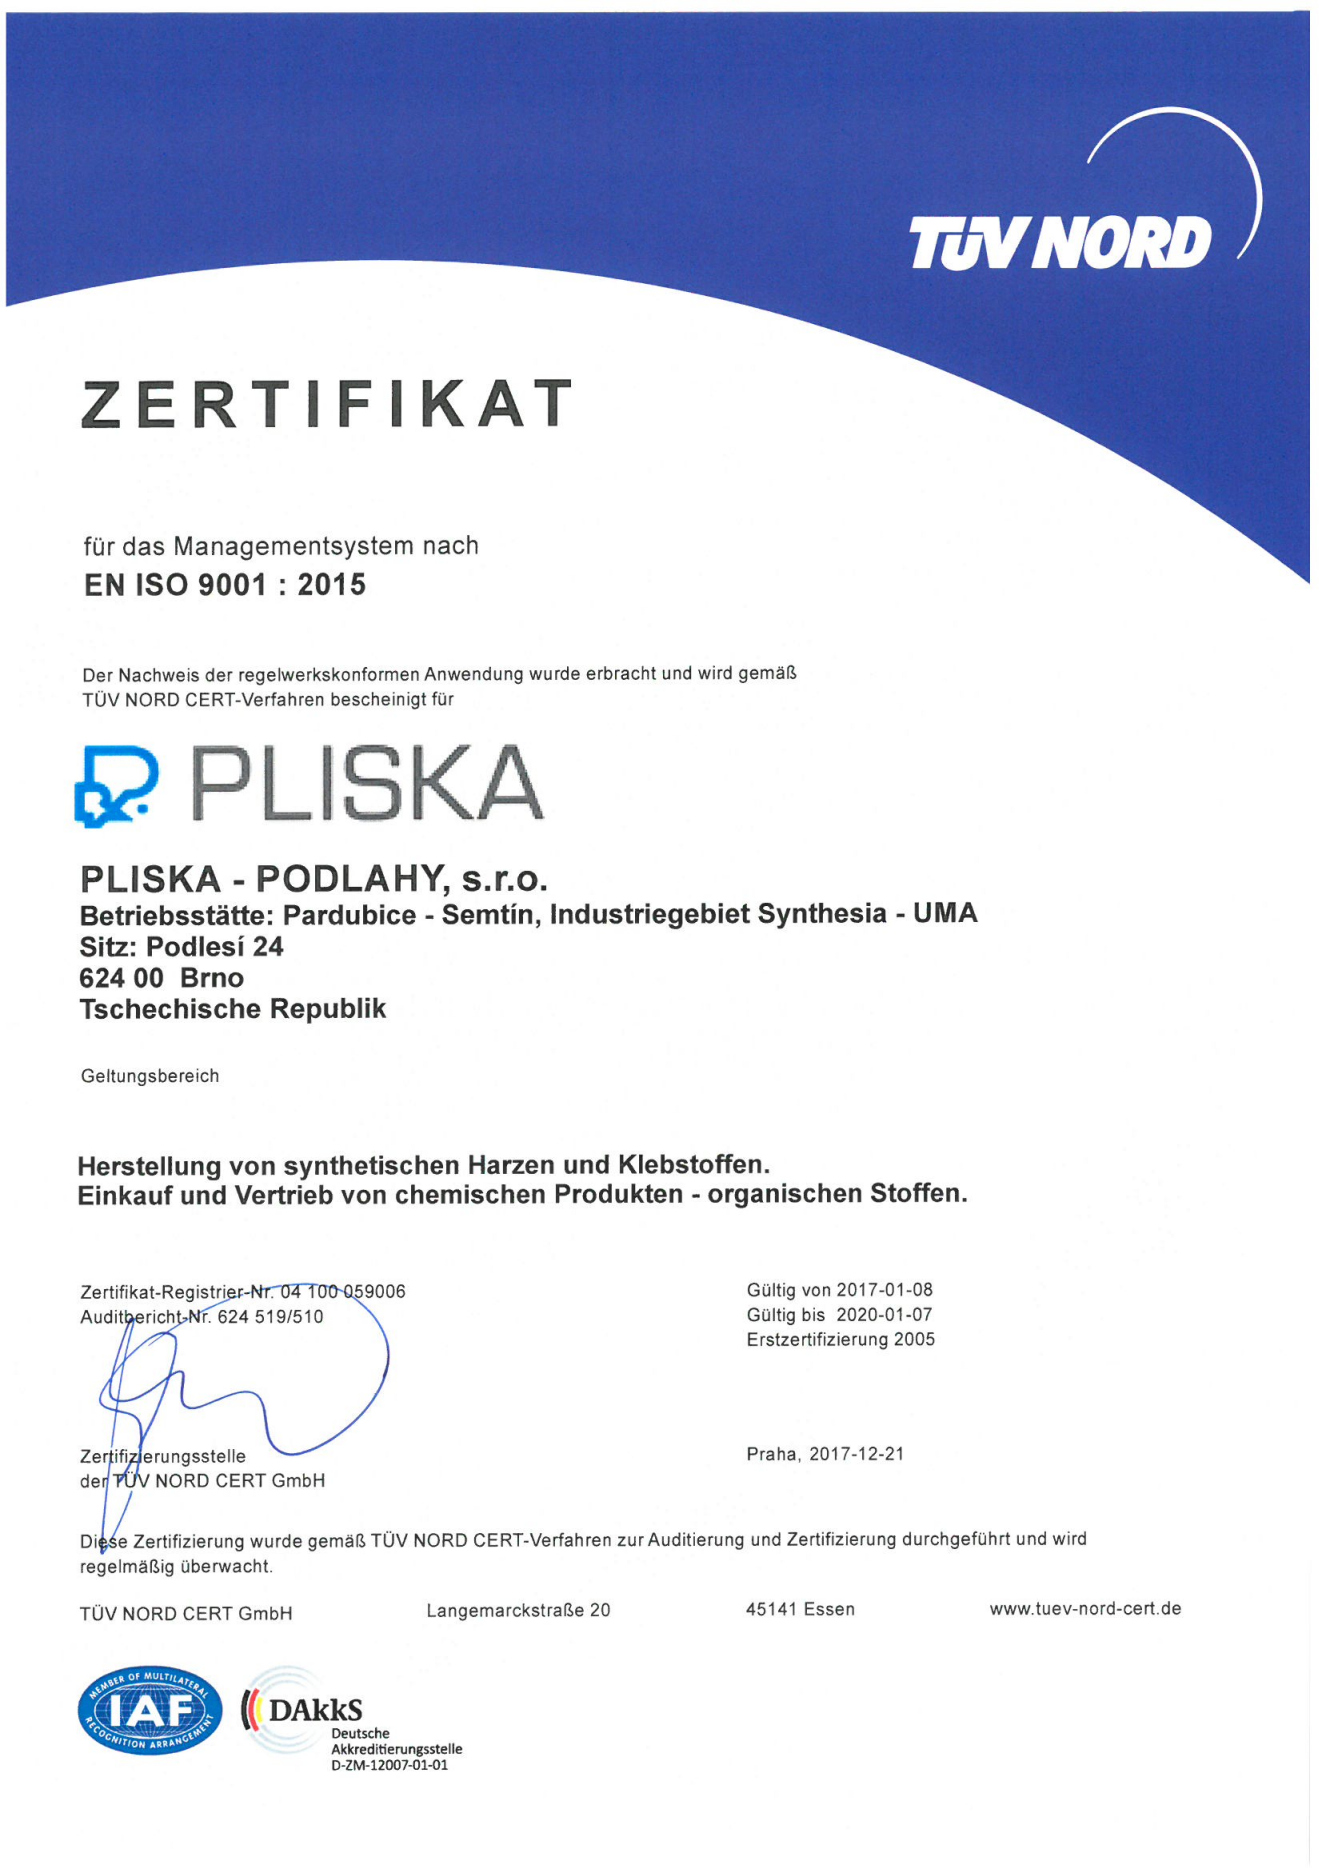 ISO 9001, pliska